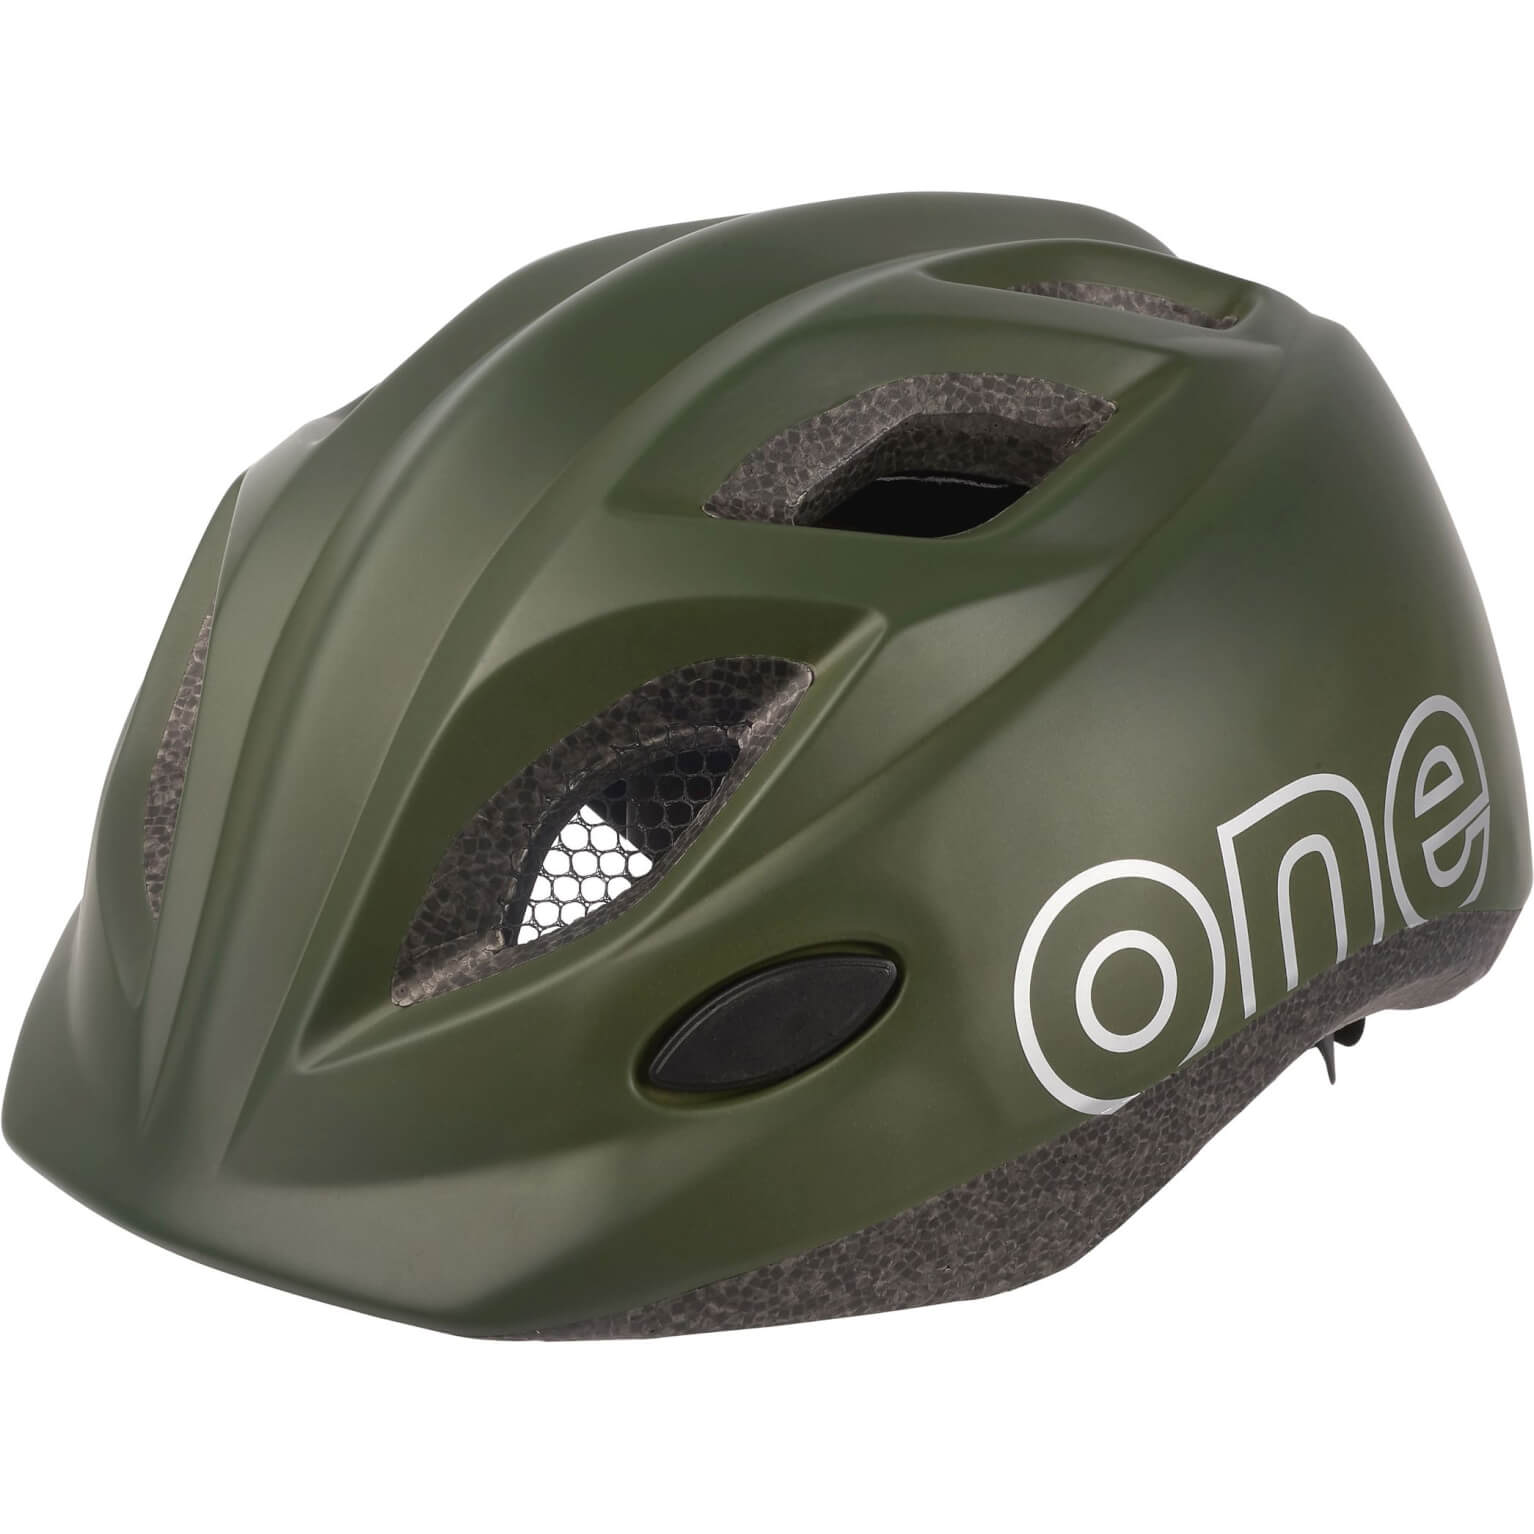 Bobike helm One plus XS 48-53 cm olive green